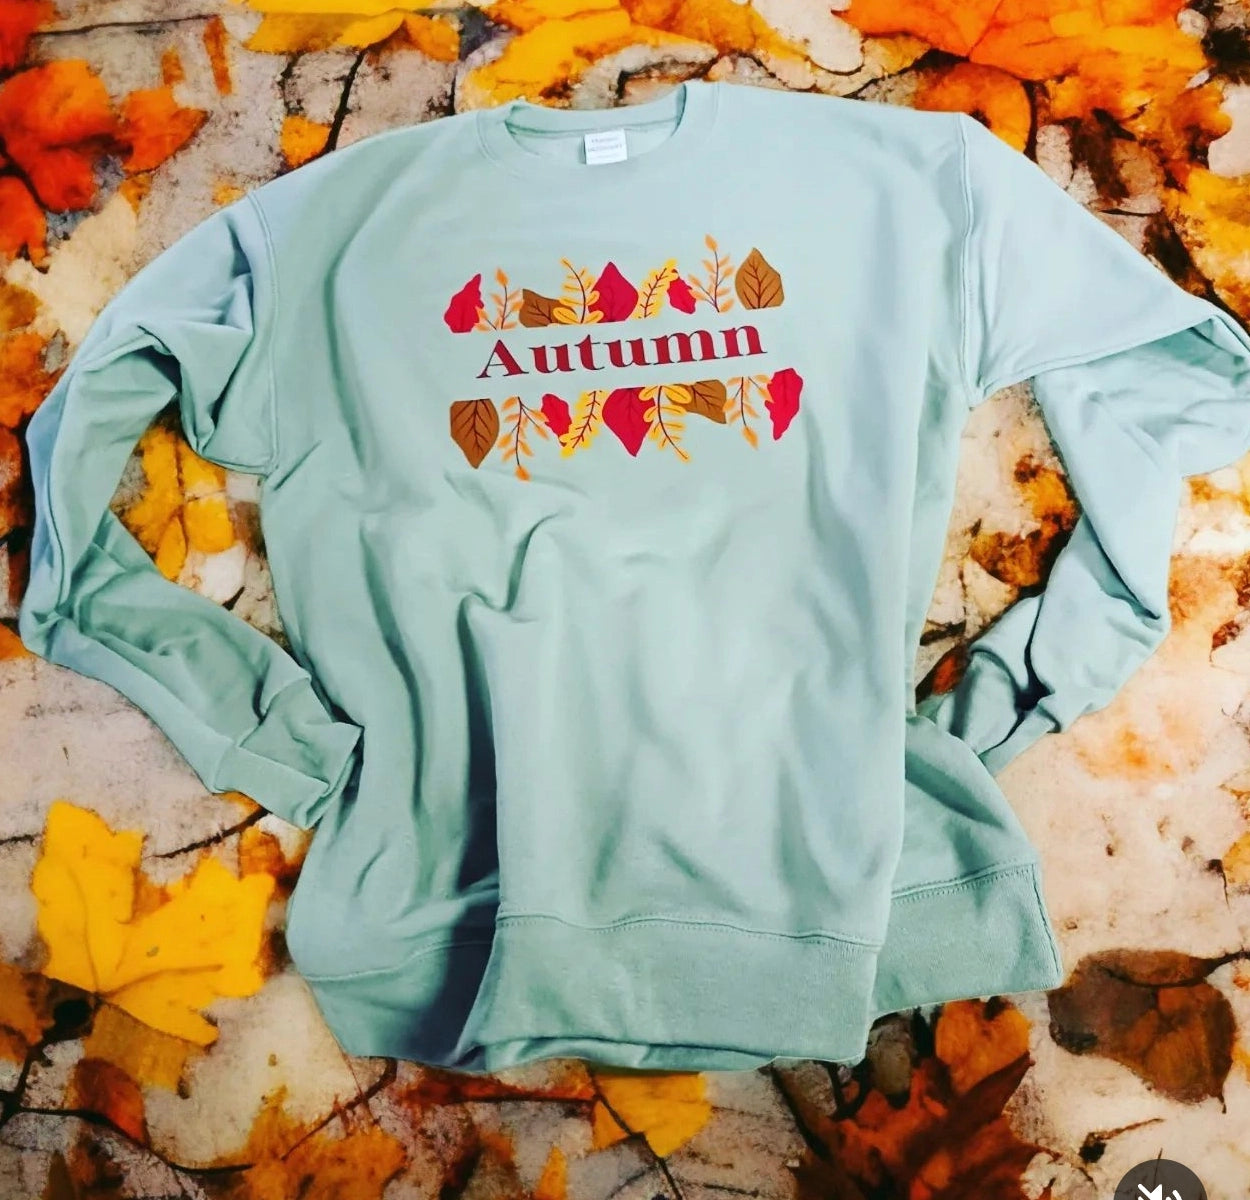 Autumn medium weight sweatshirt with graphic